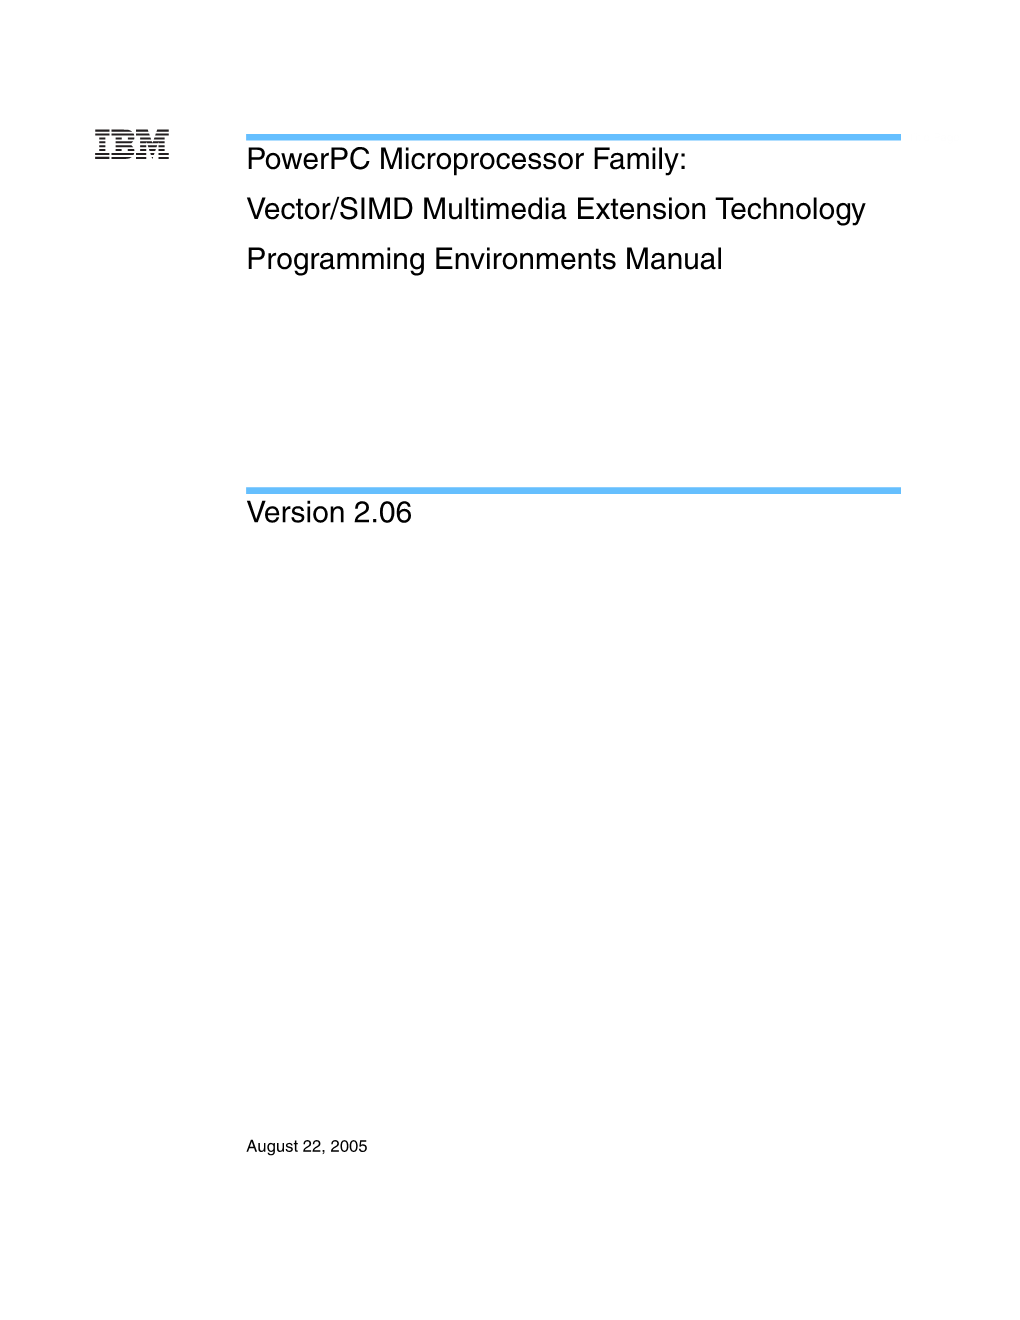 Vector/SIMD Multimedia Extension Technology Programming Environments Manual